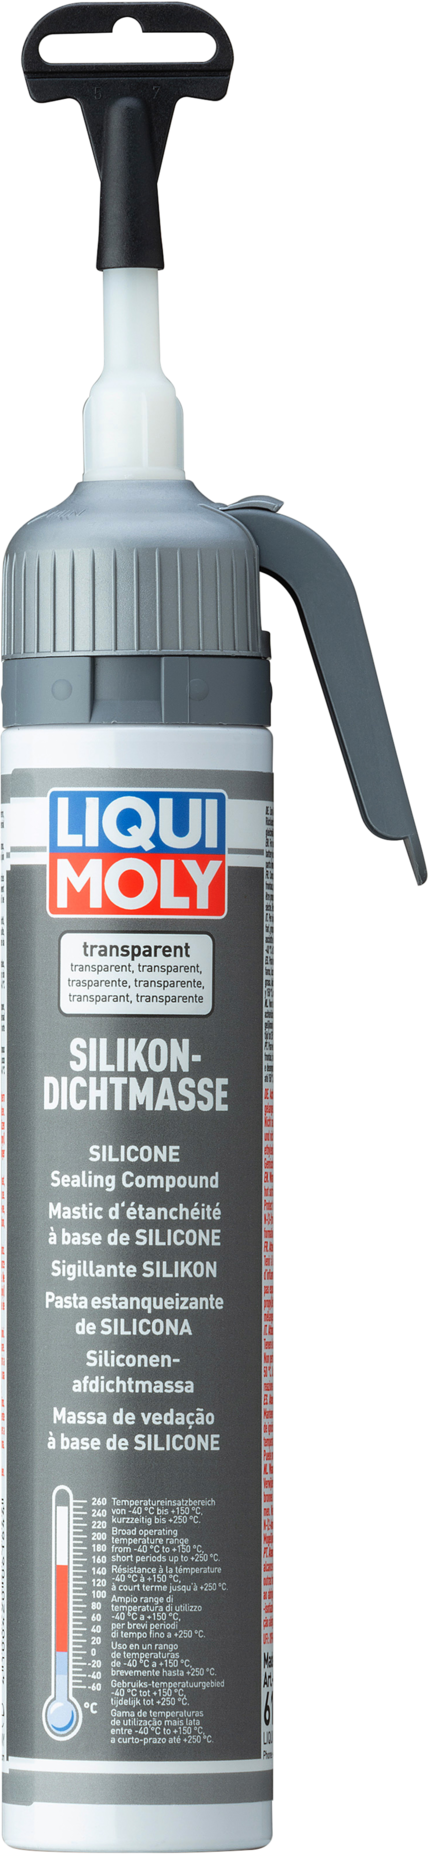 Liqui Moly Siliconen-afdichtmassa transparant, 6 x 200 ml detail 2